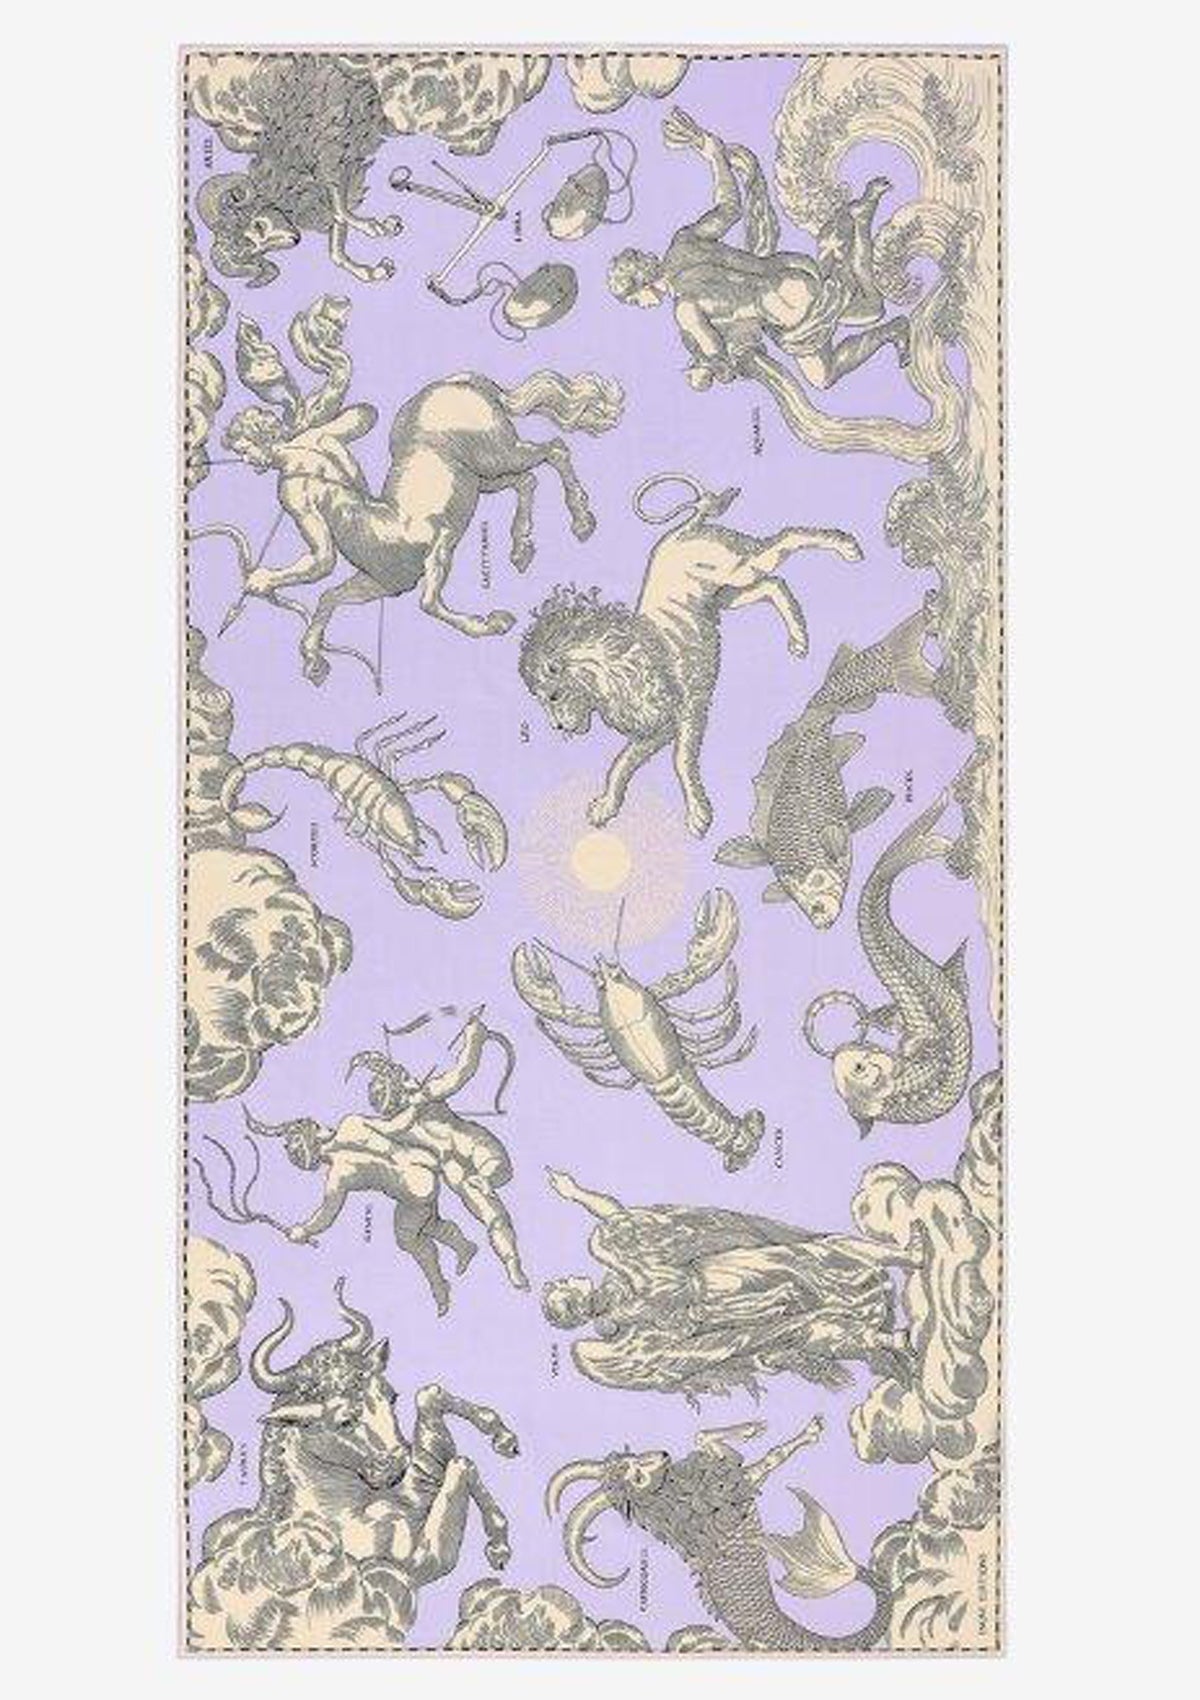 Schal aus Baumwolle & Seide in Lavendel - Astrologie Accessoires Tücher & Schals Inoui E. 